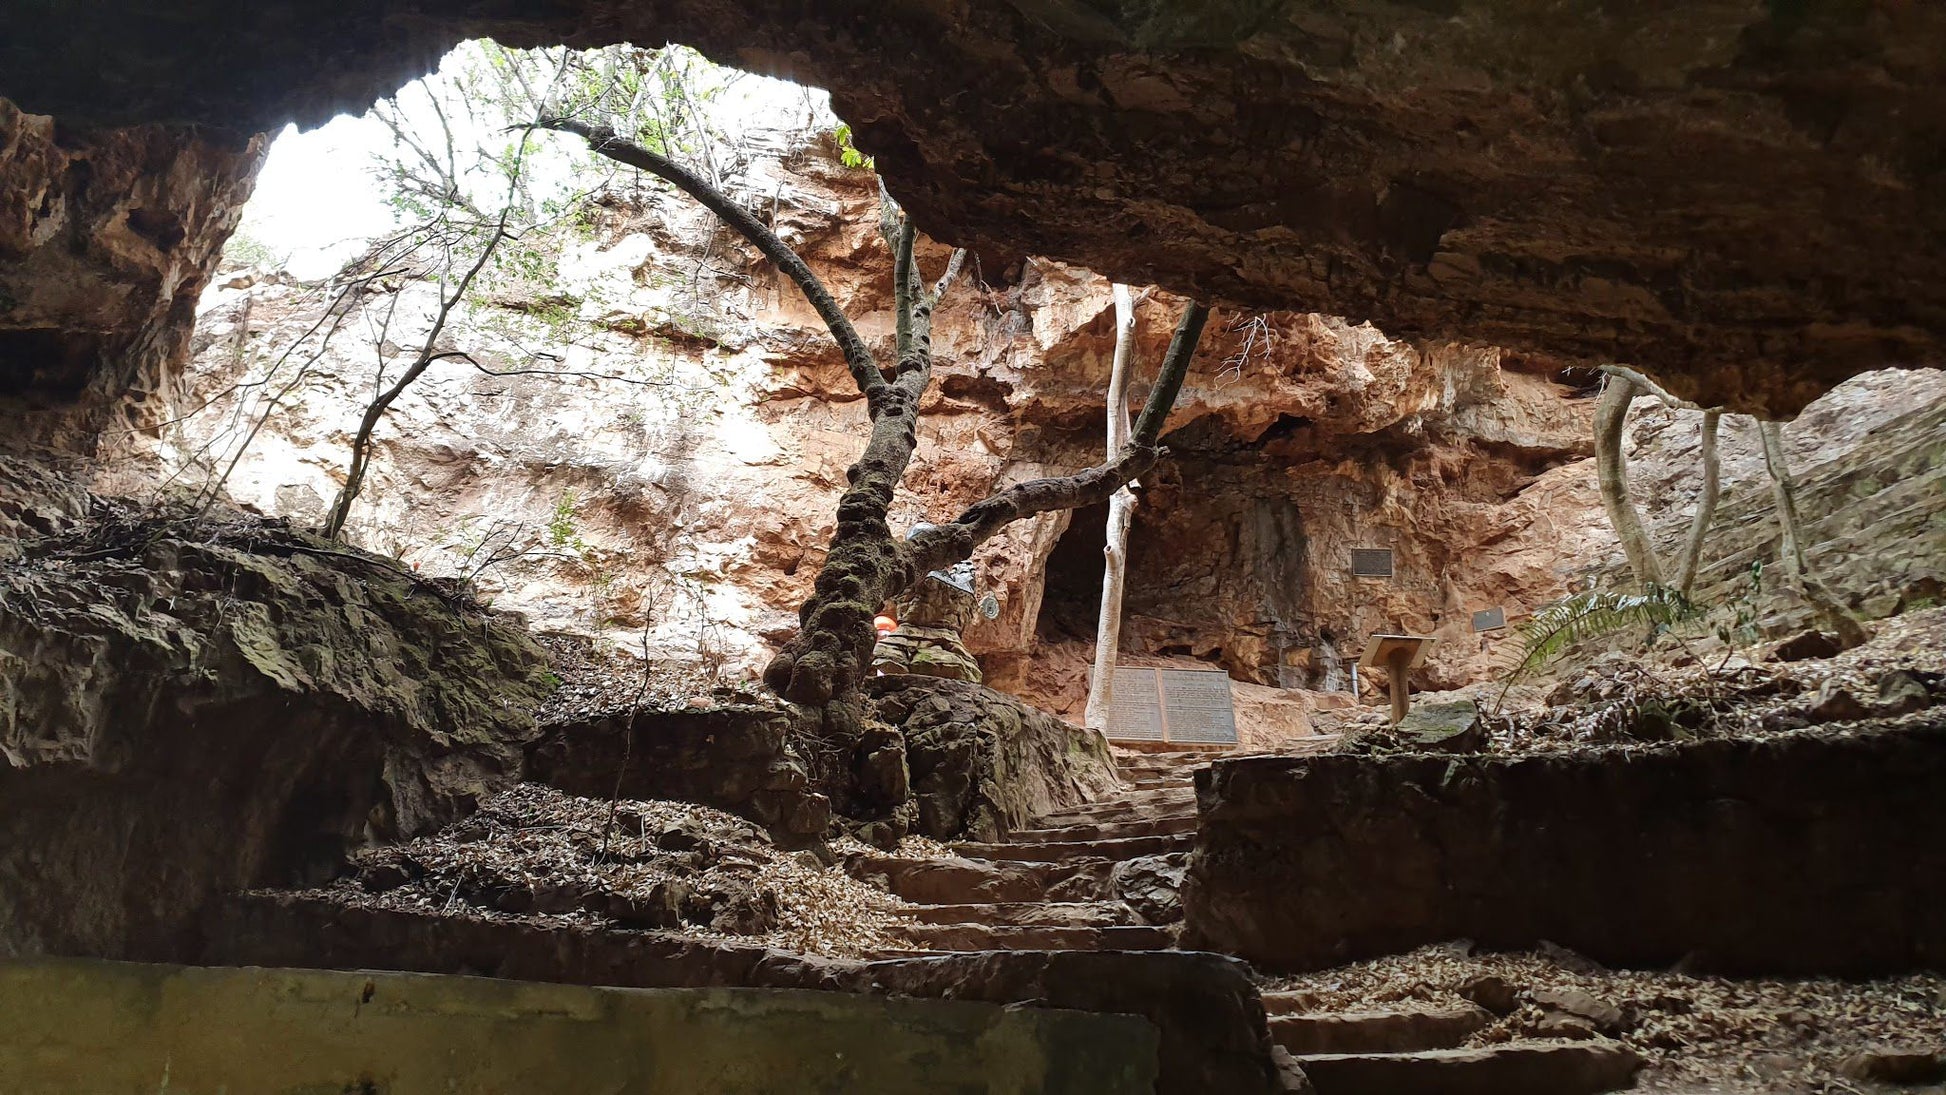  Sterkfontein Caves